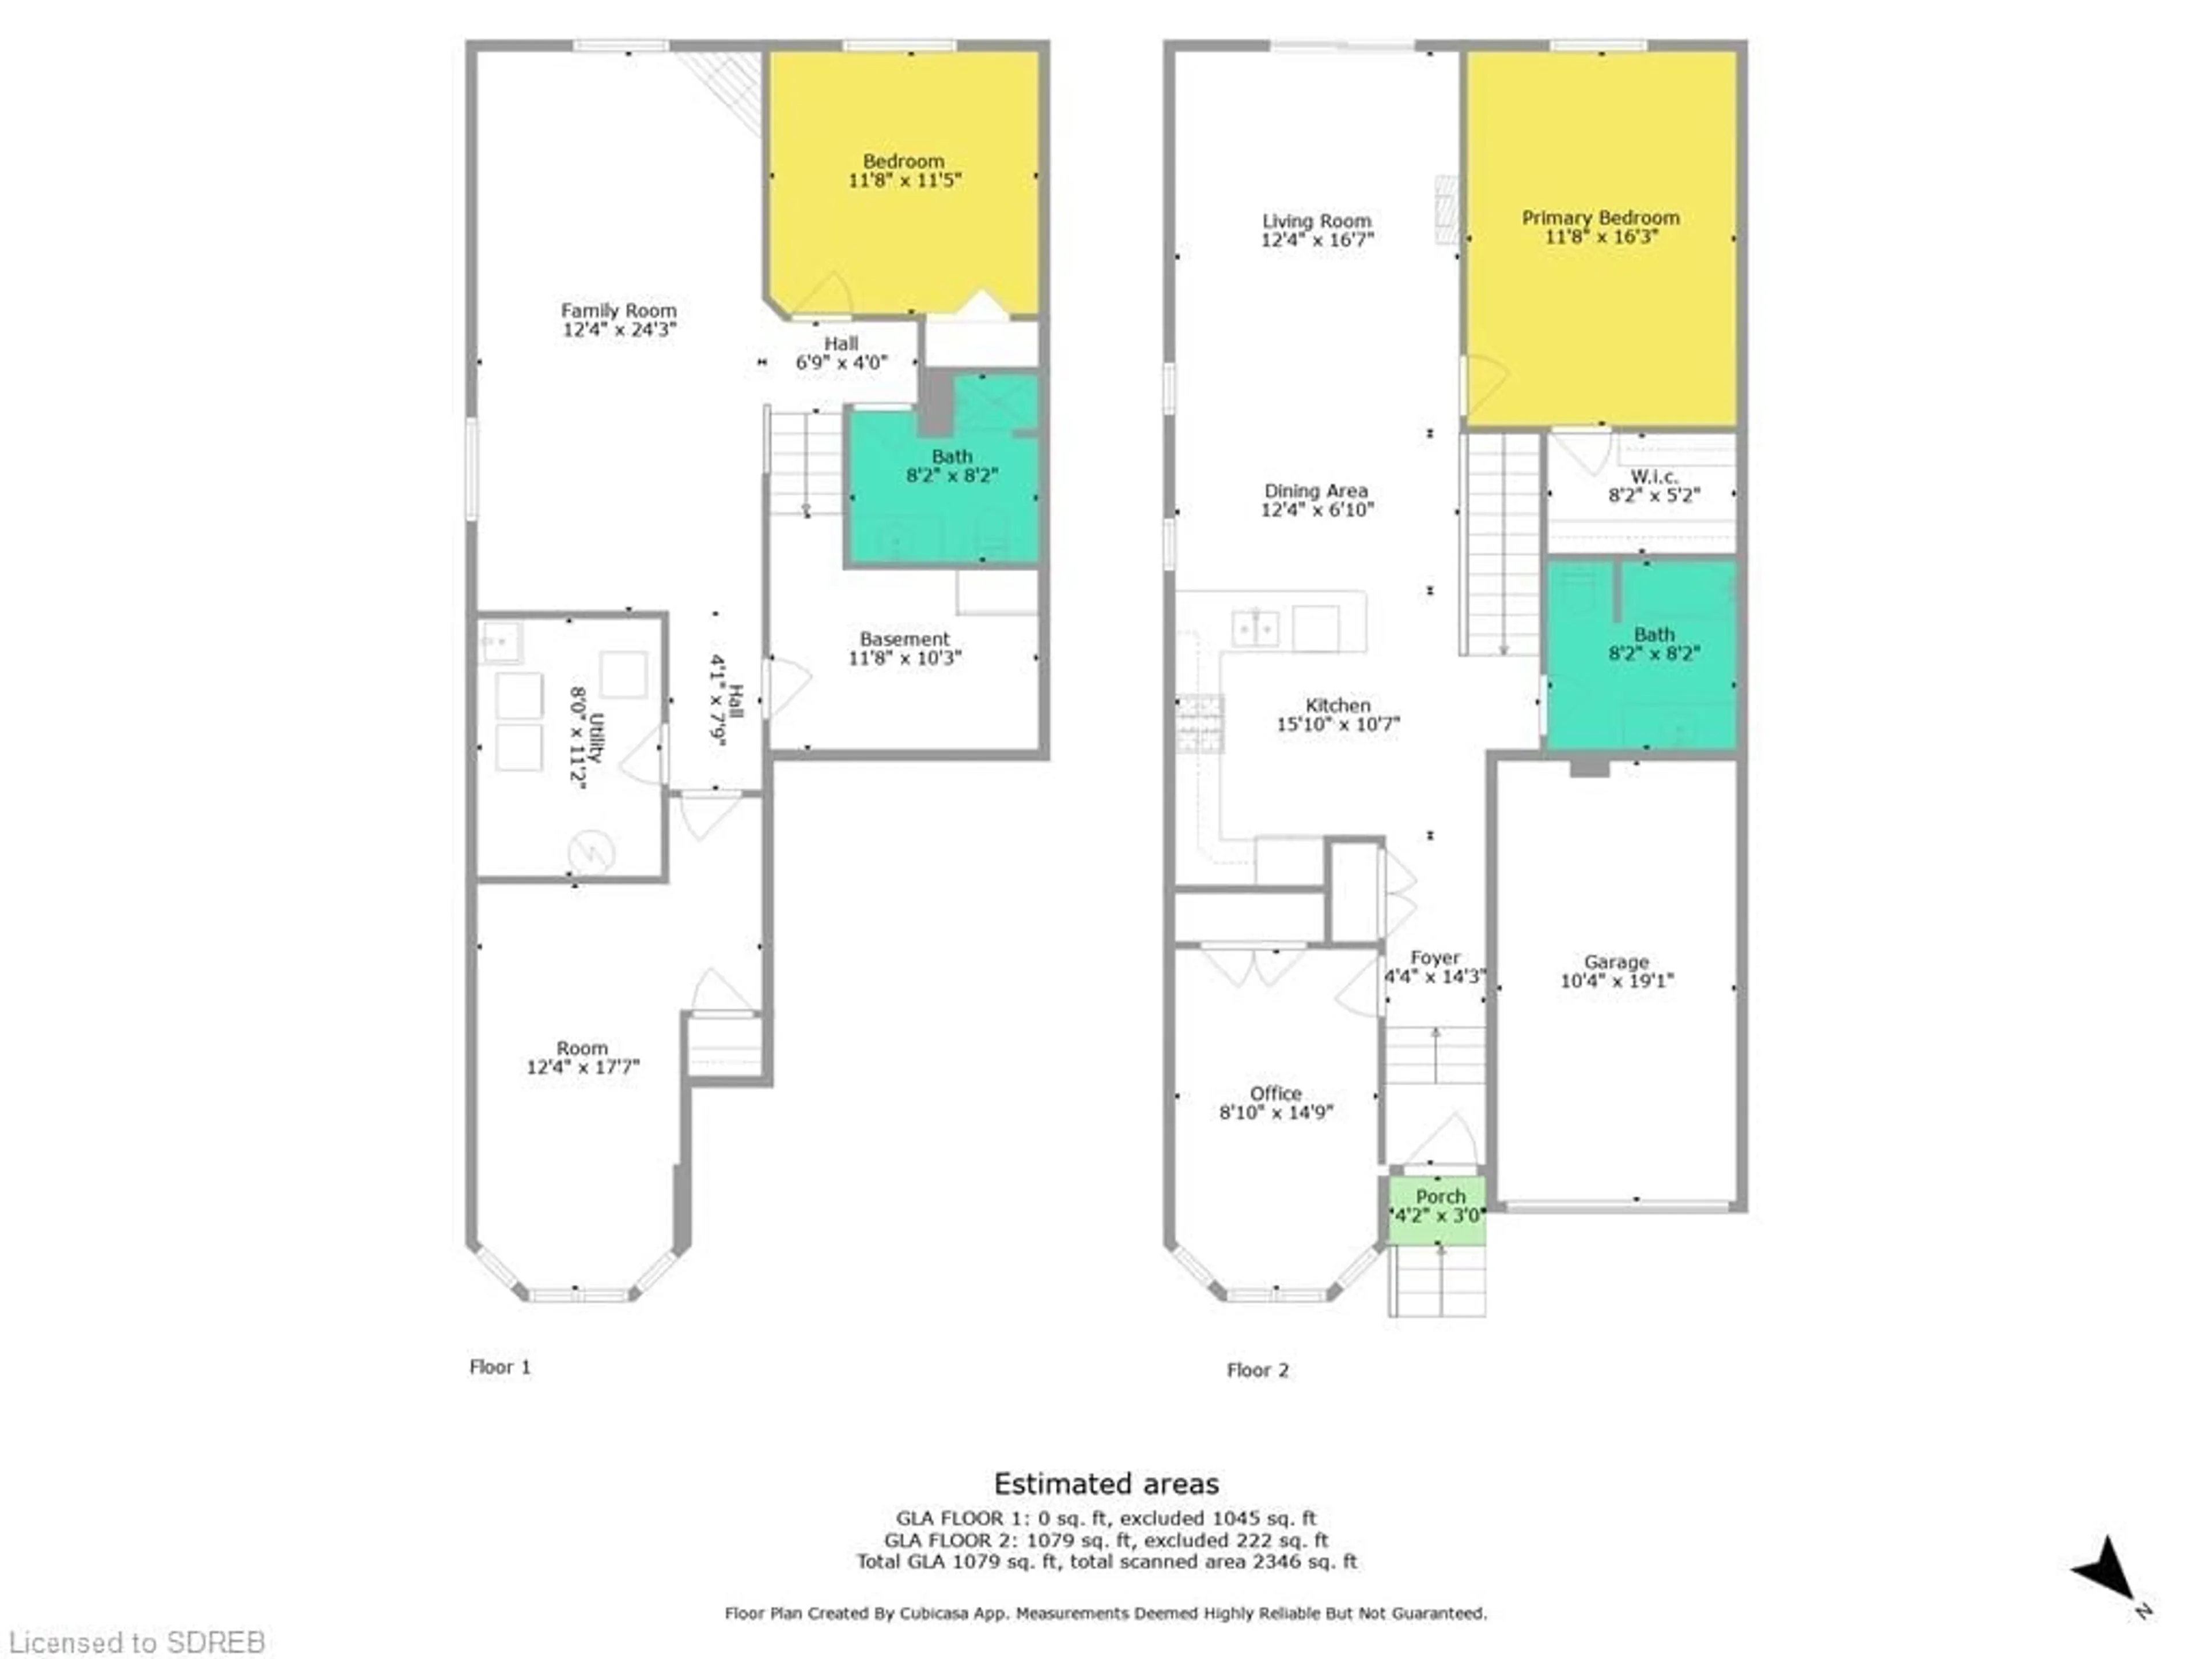 Floor plan for 28 Millcroft Dr, Simcoe Ontario N3Y 0B1